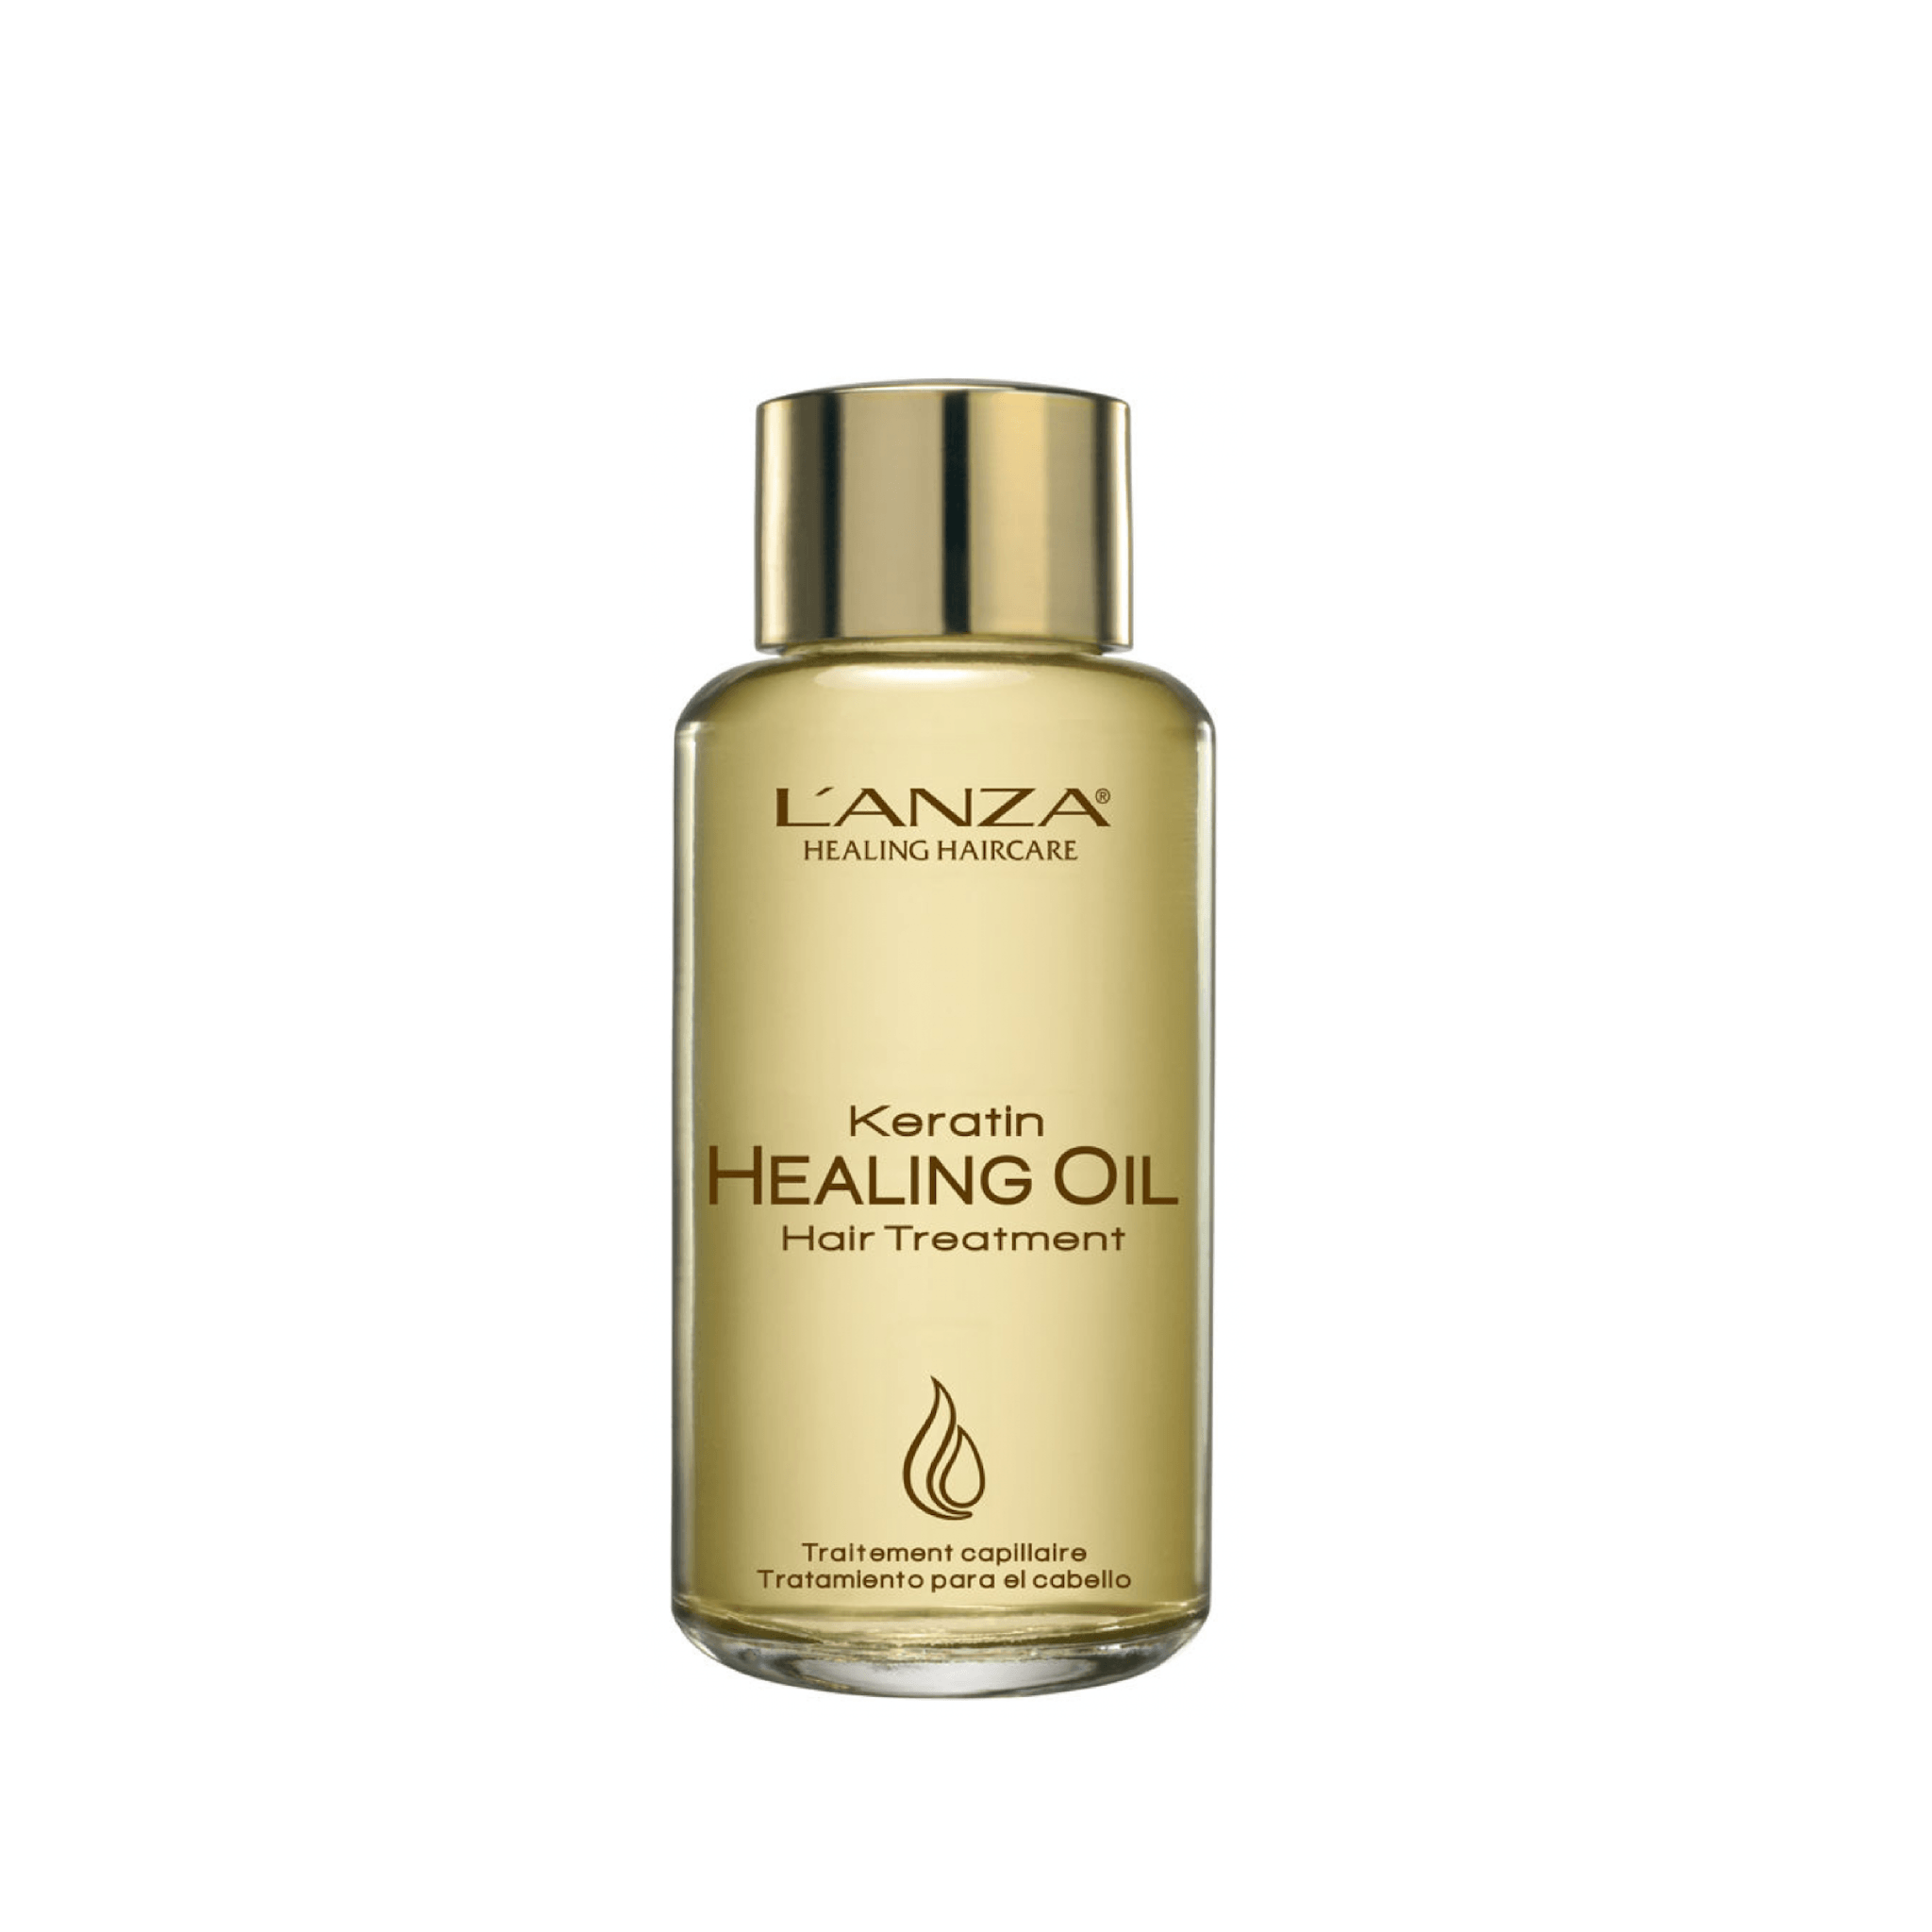 L’Anza. Keratin Healing Oil Traitement Capillaire - 50ml - Concept C. Shop